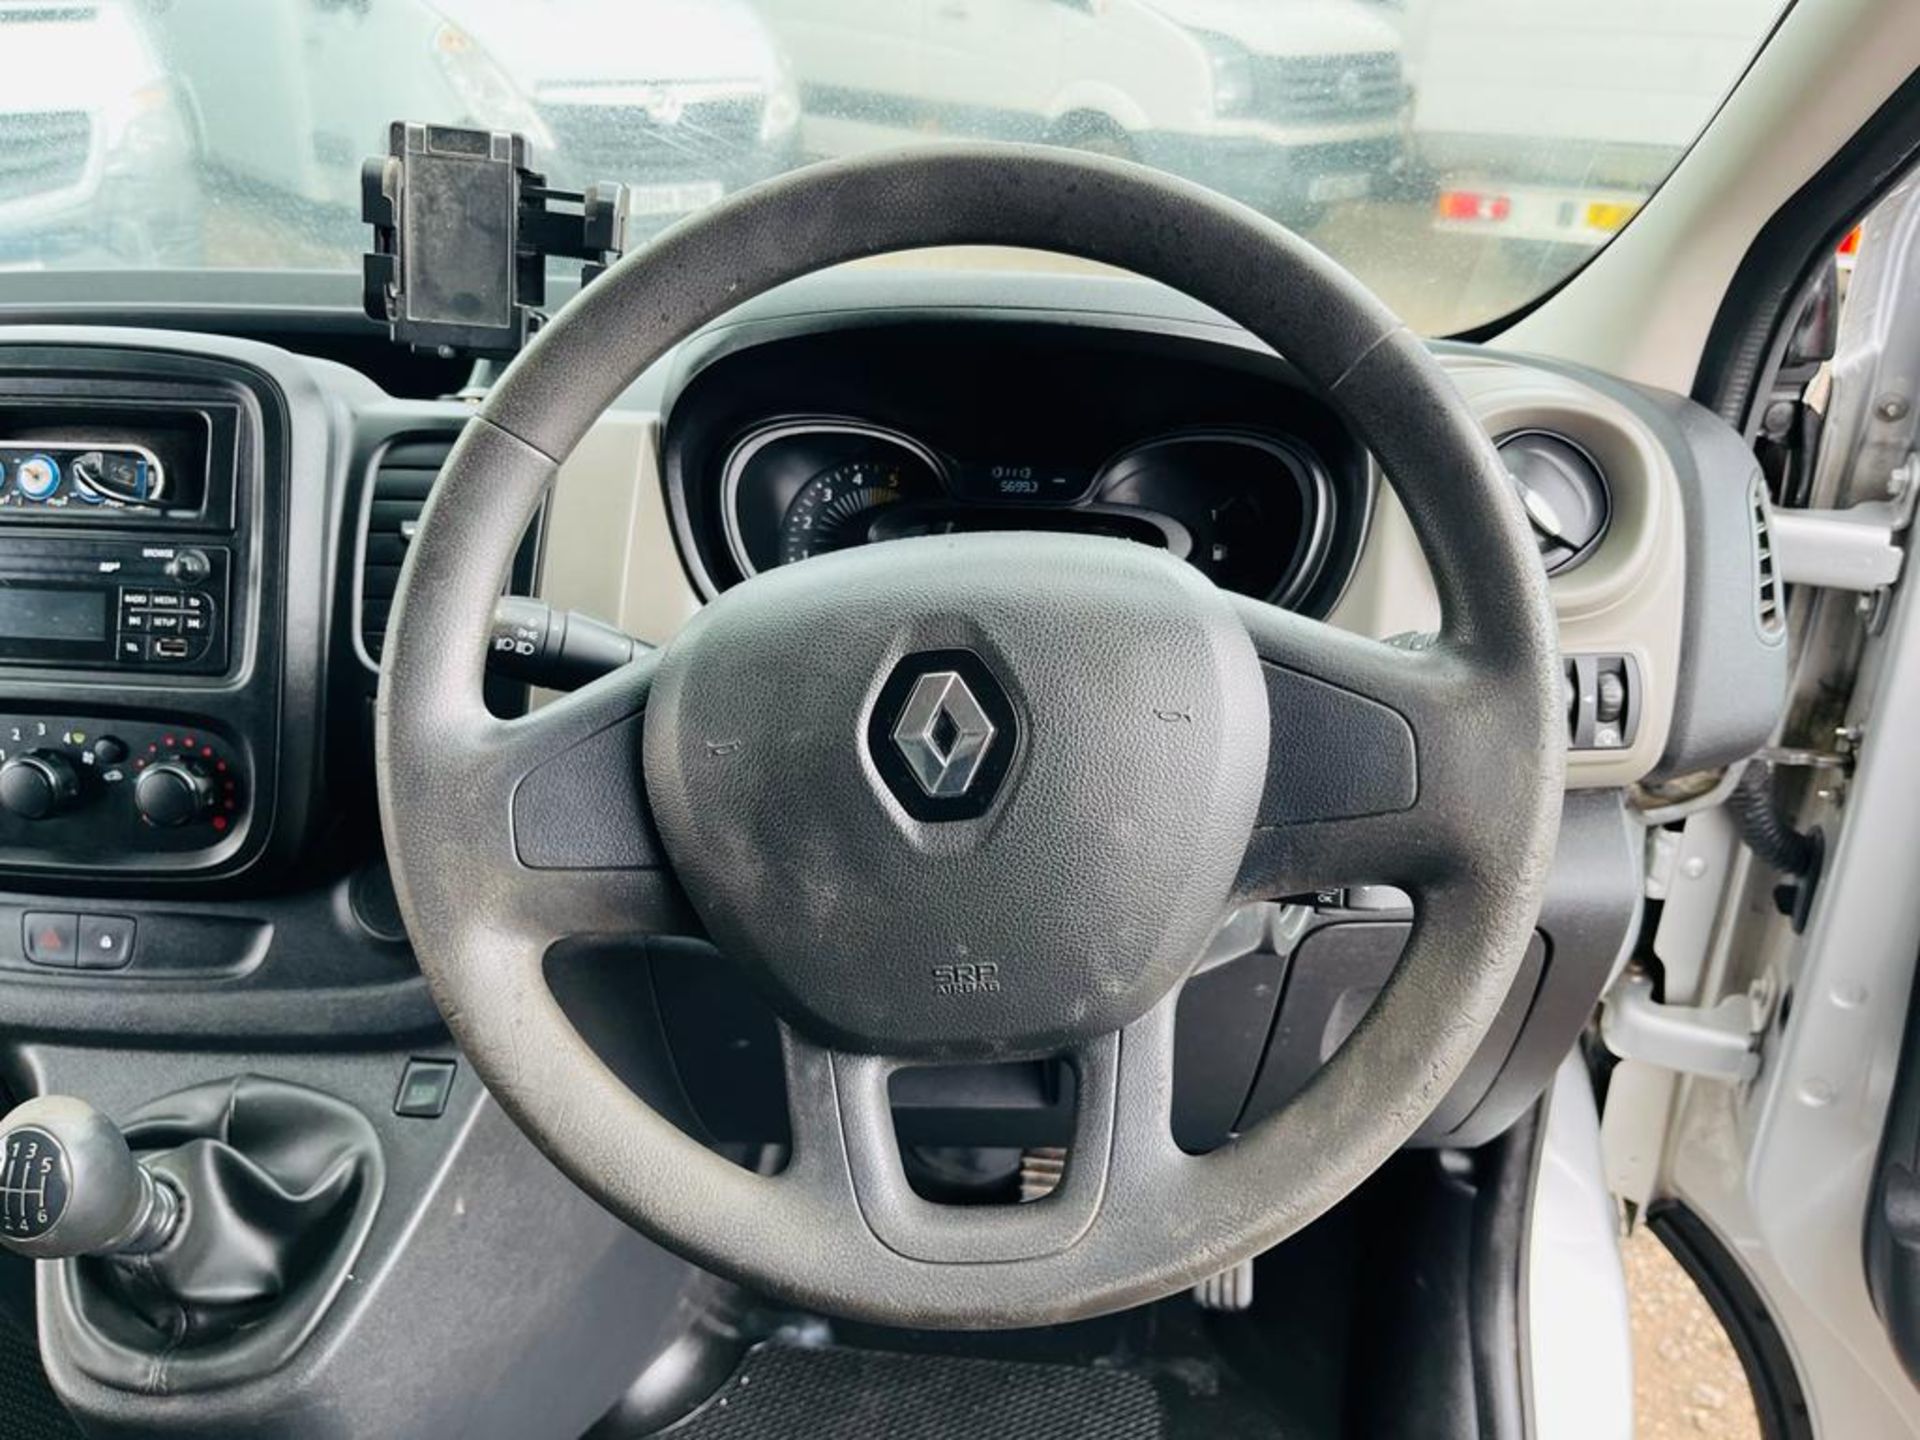 ** ON SALE ** Renault Trafic SL27 Business 1.6 DCI L1 H1 2015 '15 Reg' Panel Van - Image 16 of 24